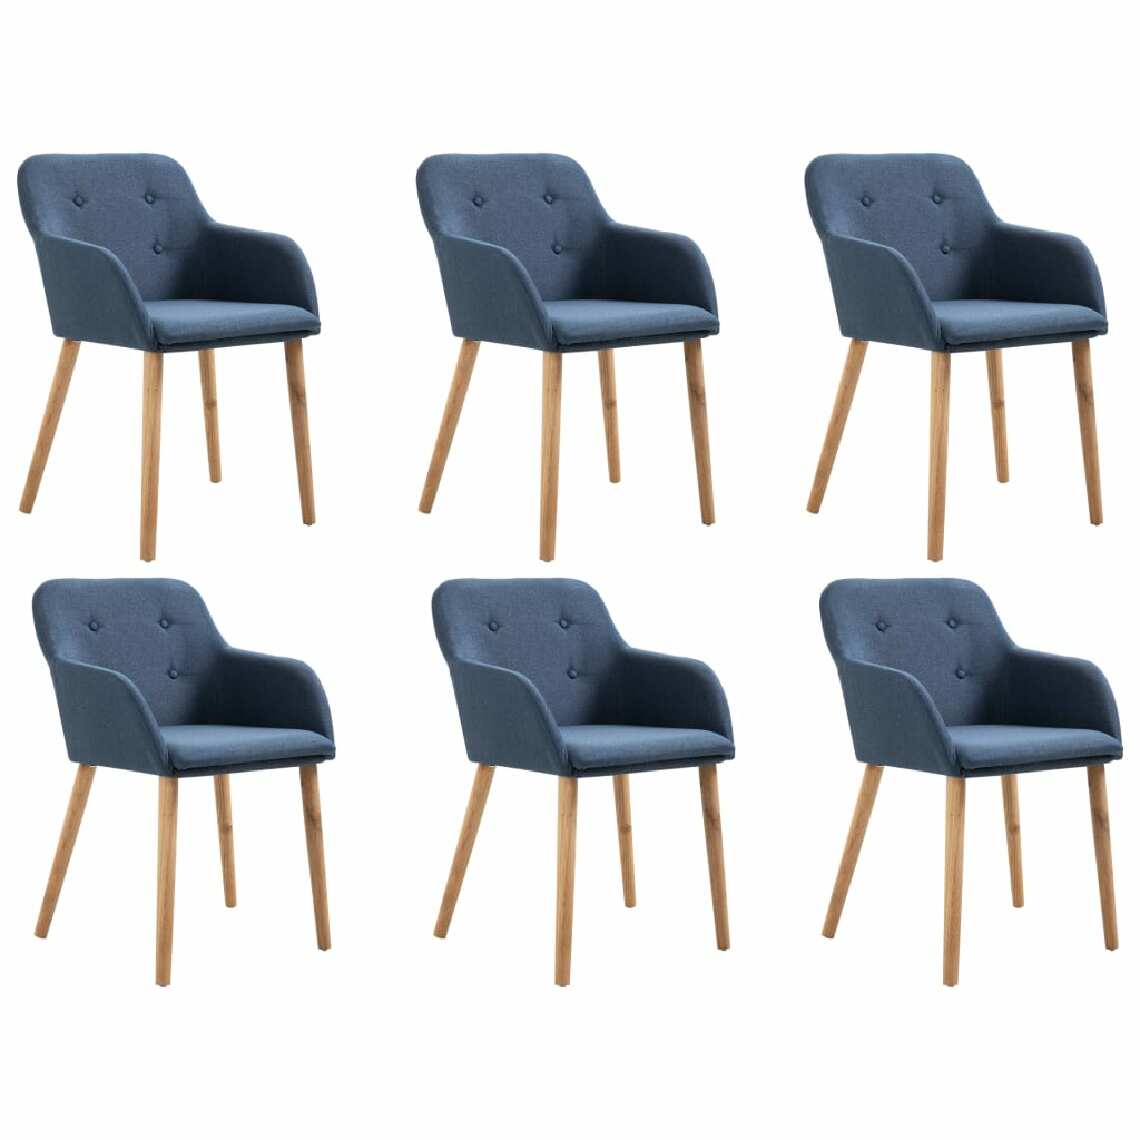 Chunhelife - Chunhelife 6 pcs Chaises de salle à manger Bleu Tissu et chêne massif - Chaises